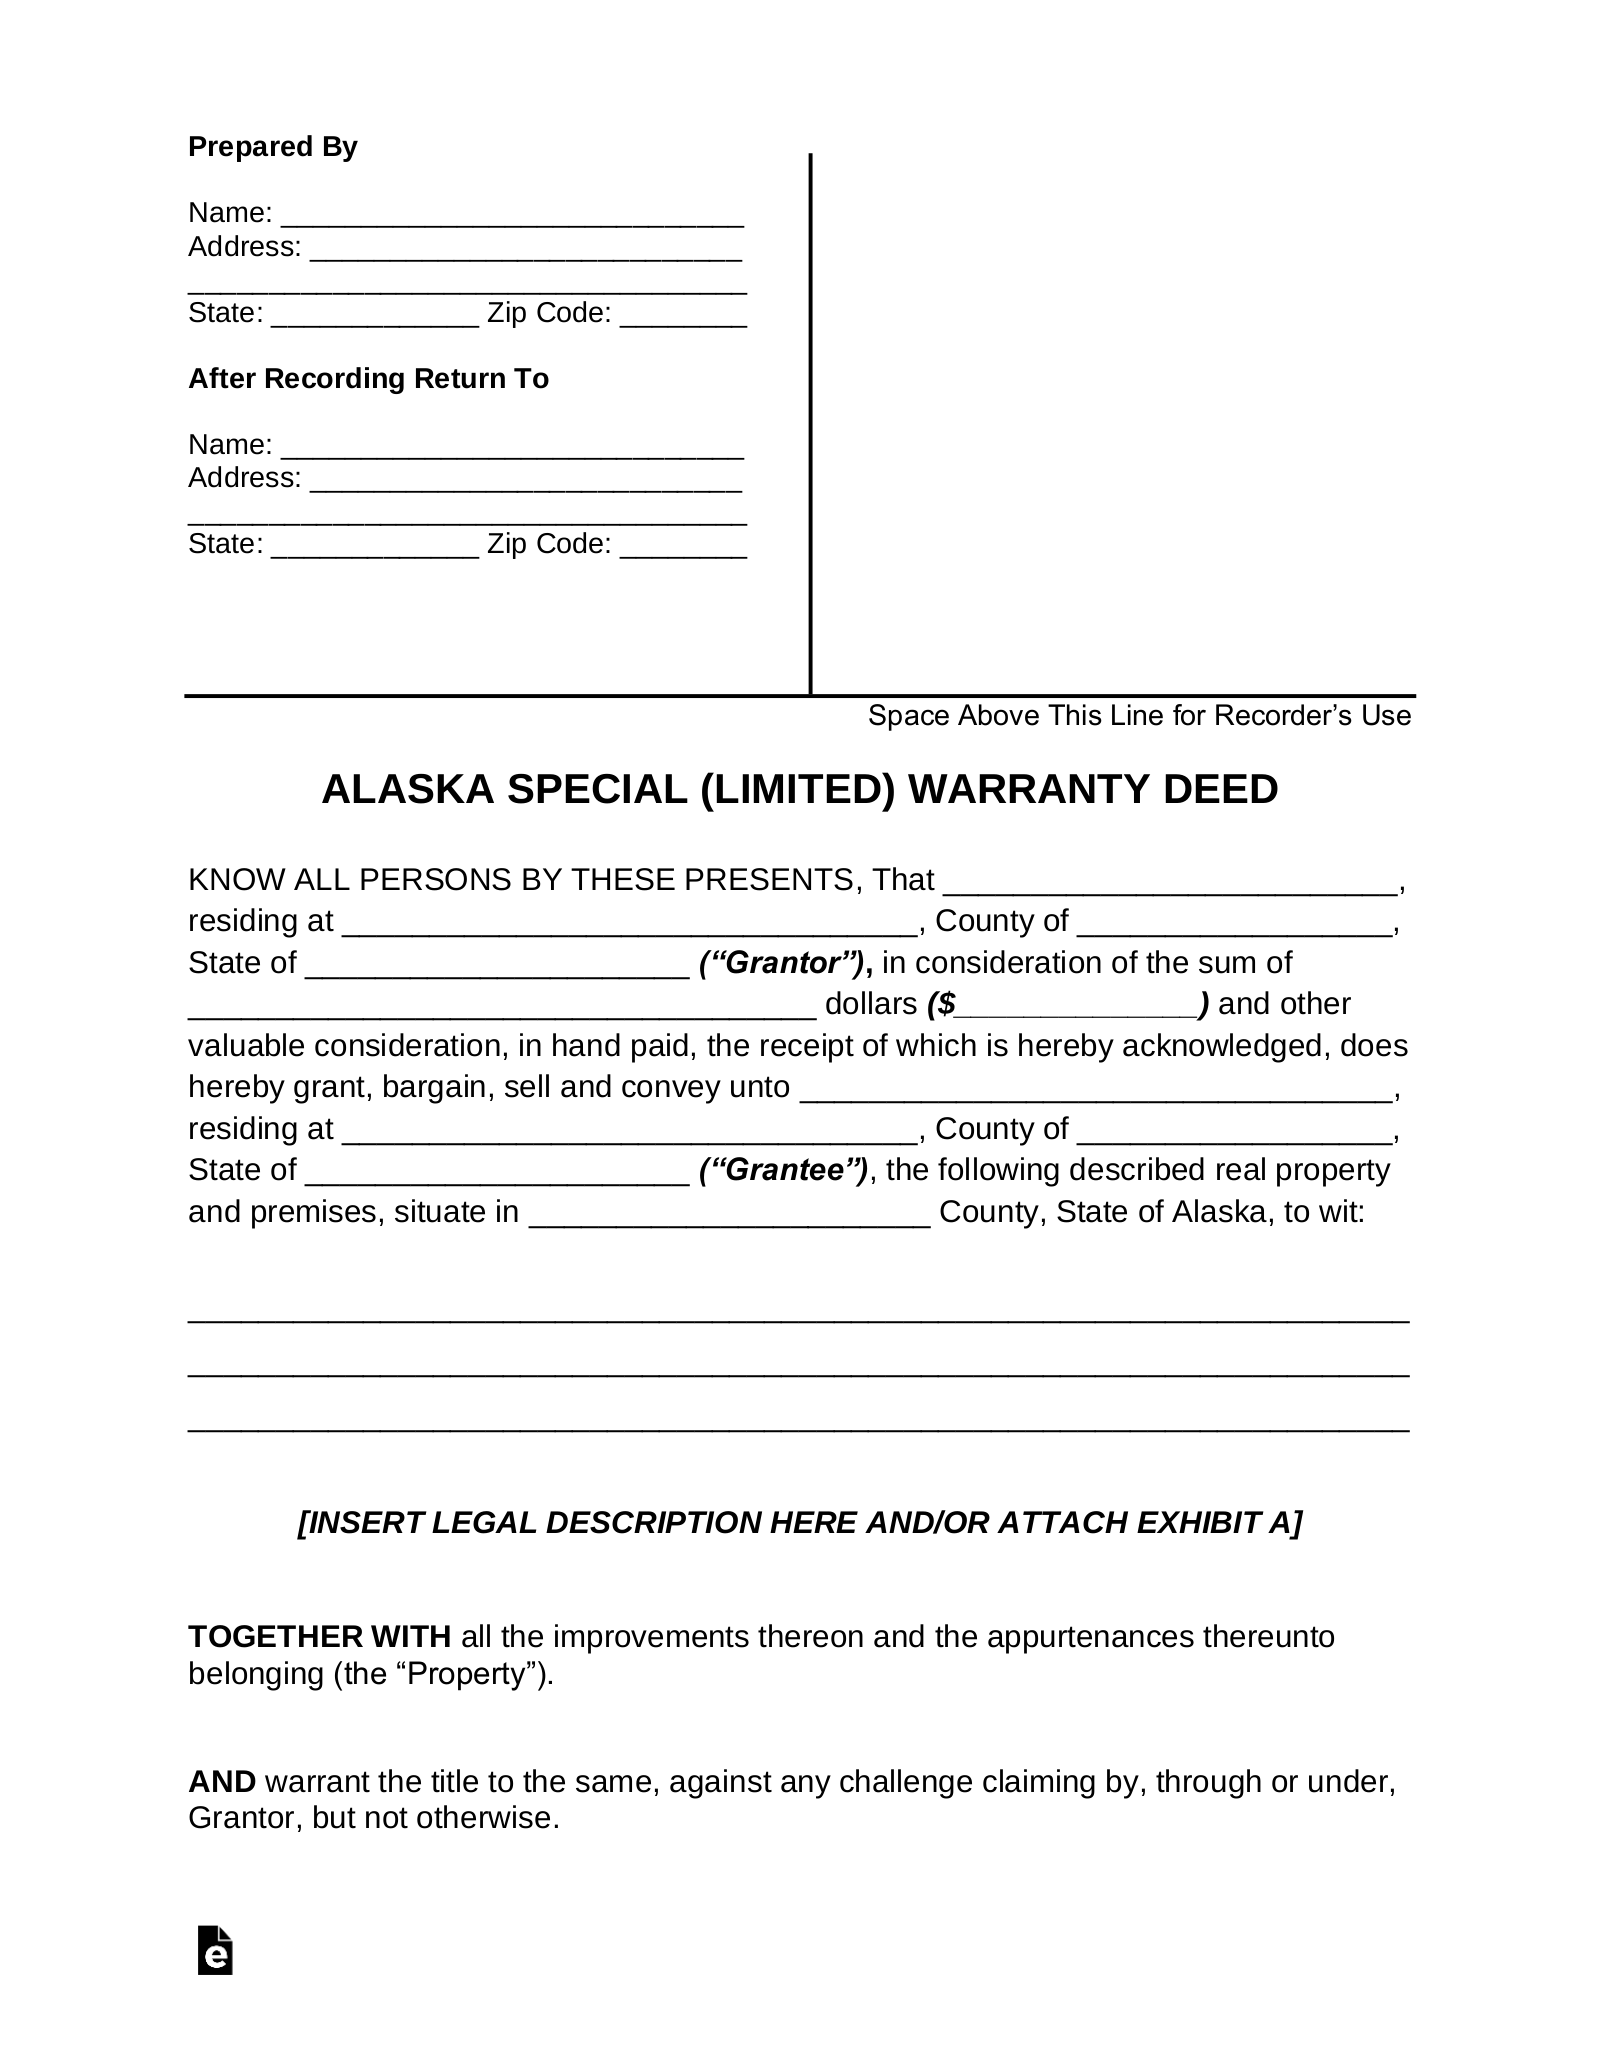 Alaska Special Warranty Deed Form